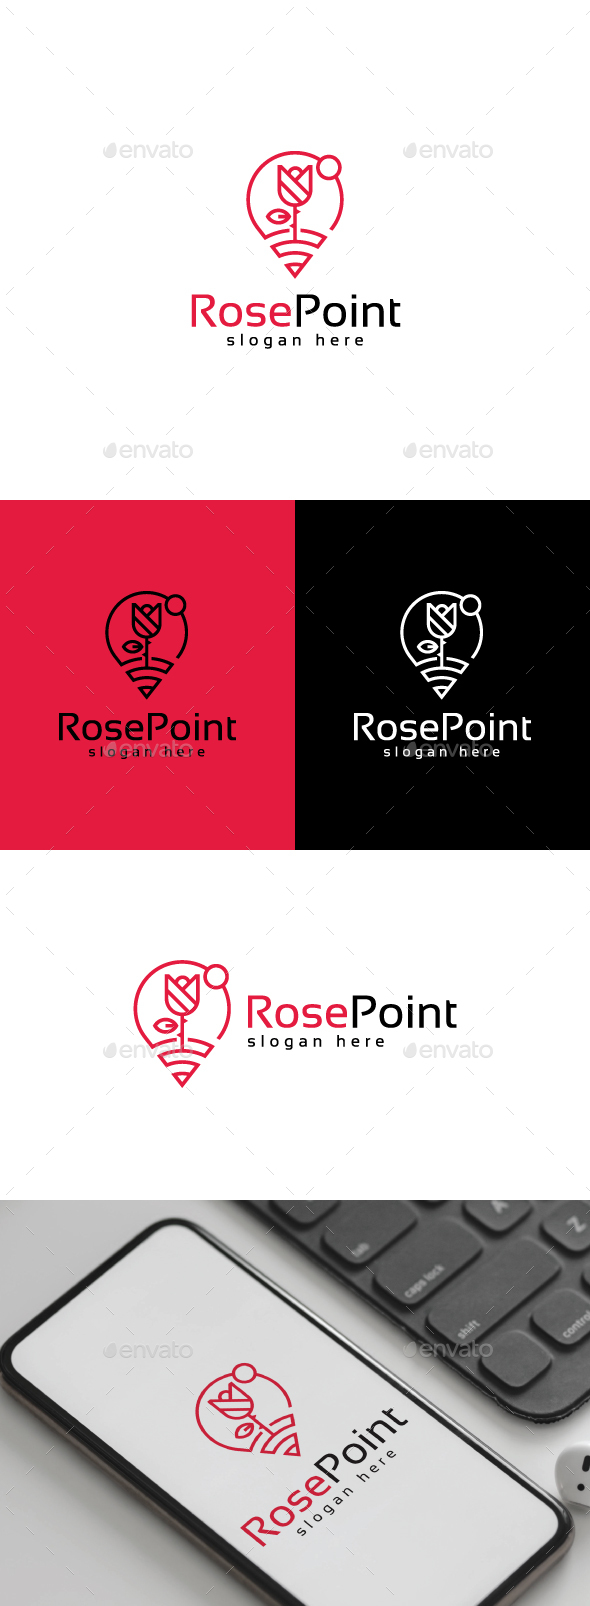 [DOWNLOAD]Rose Flower Point Logo